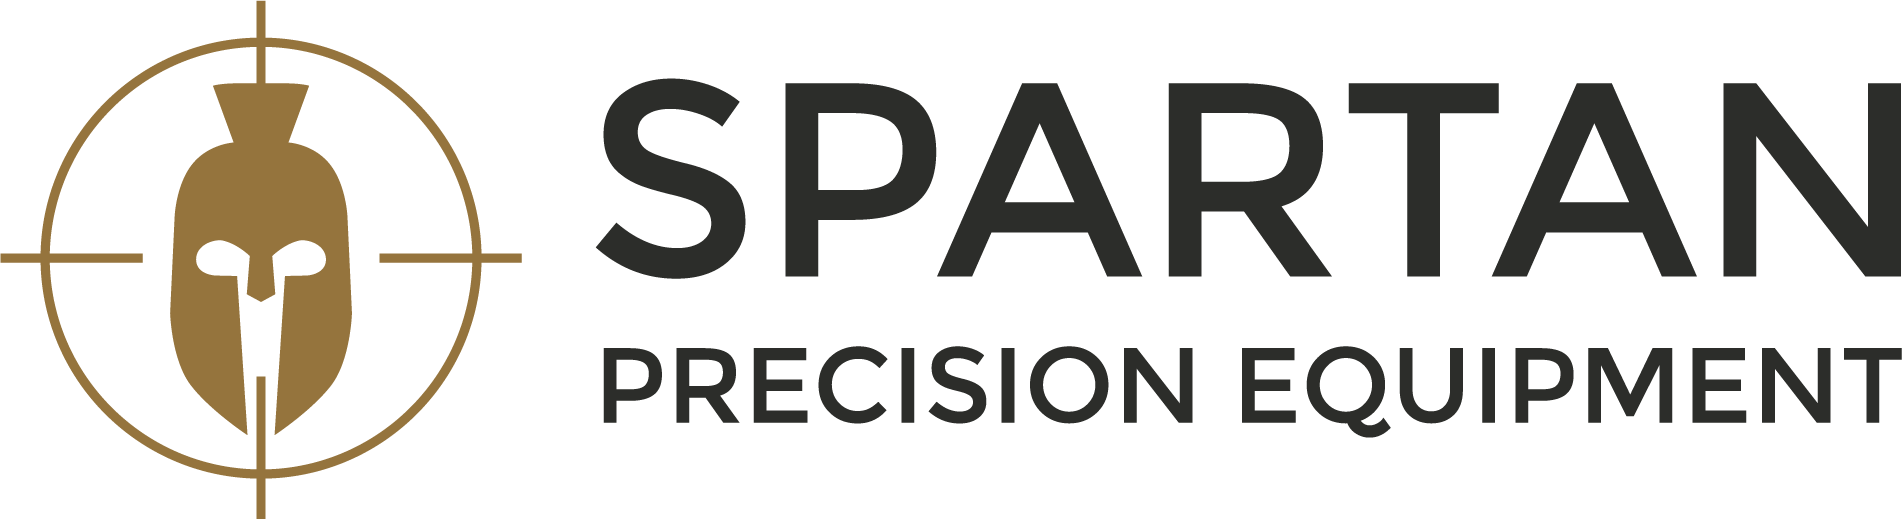 logo_spratan